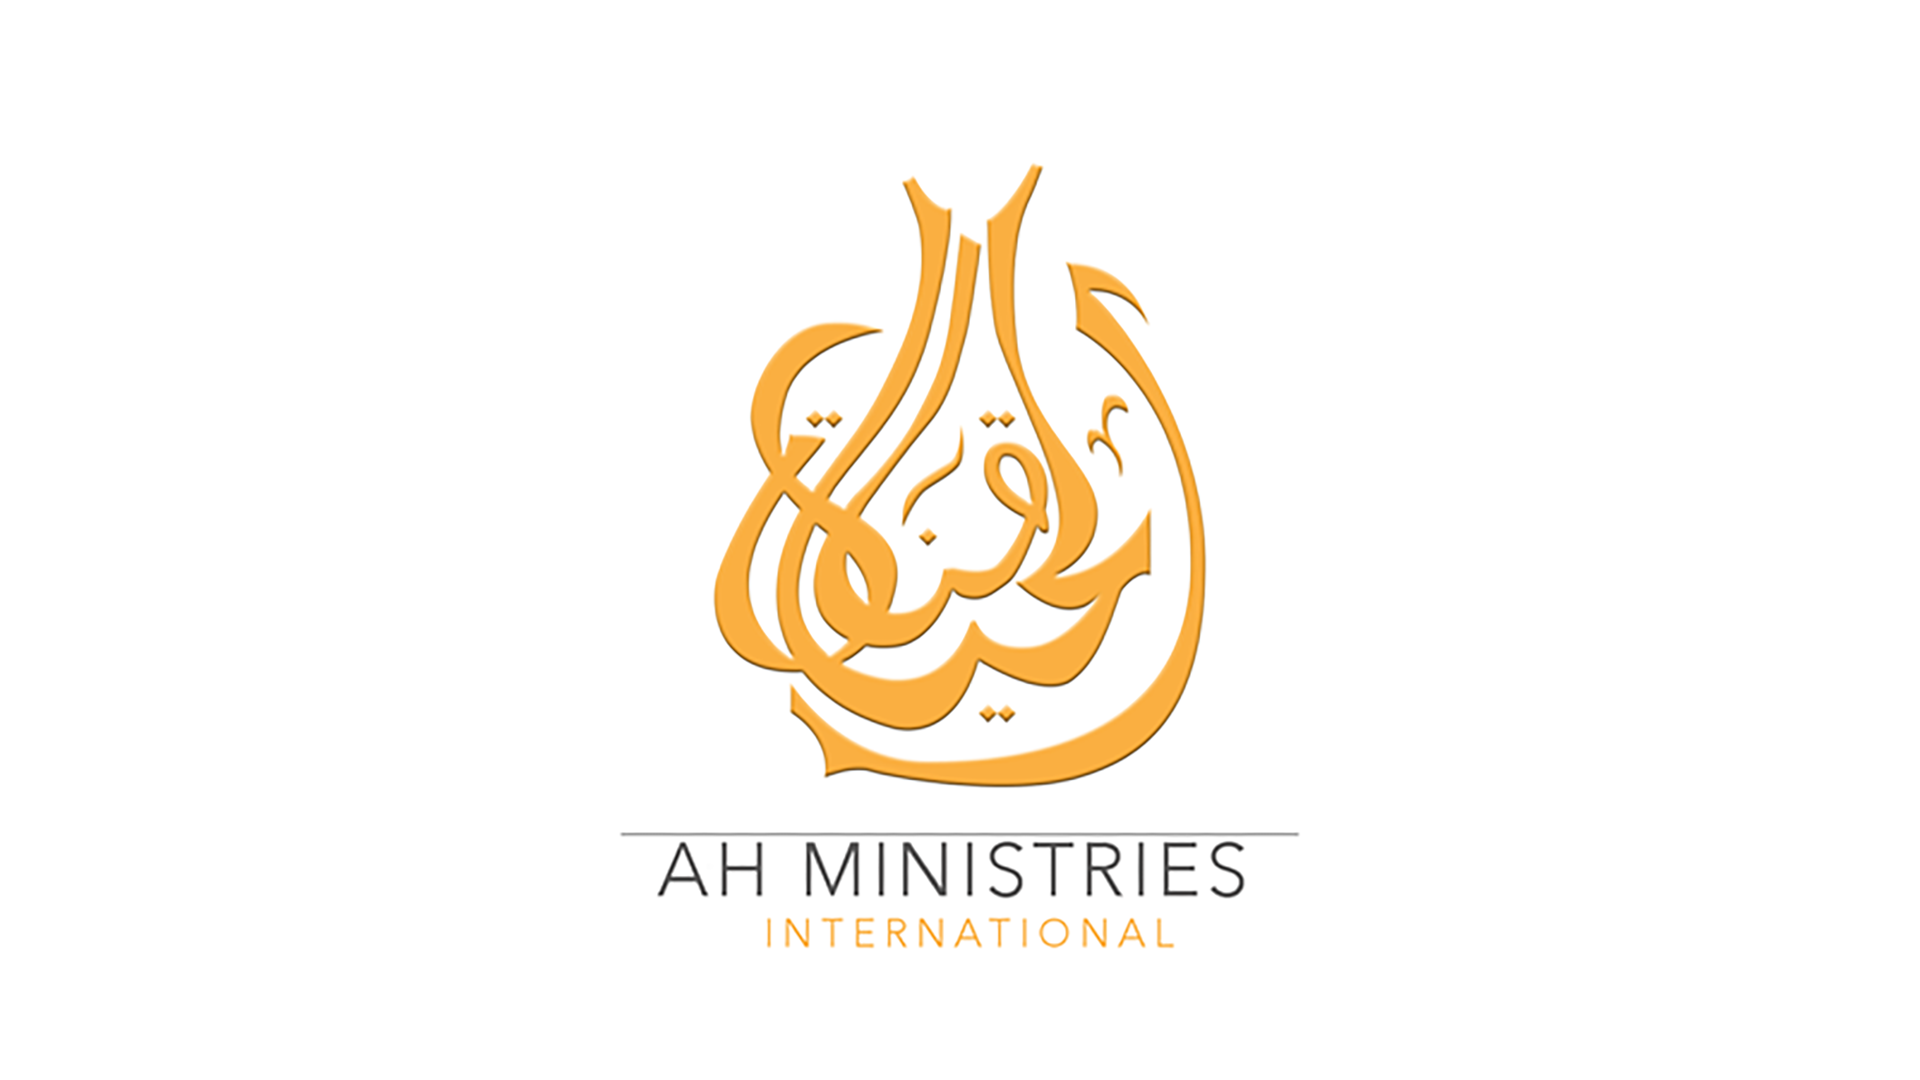 AH Ministries International logo